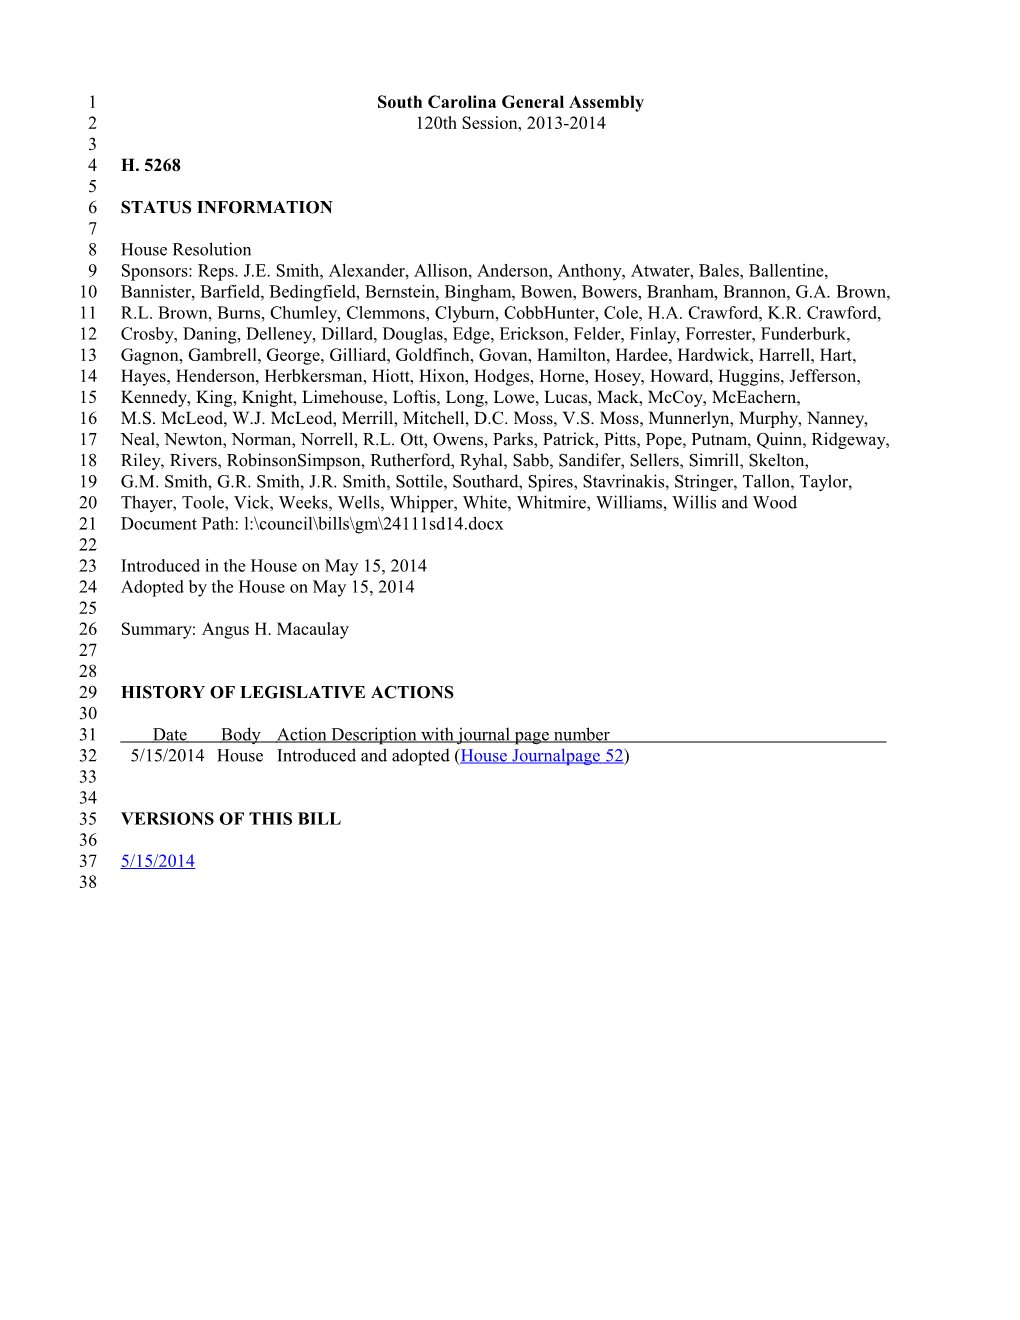 2013-2014 Bill 5268: Angus H. Macaulay - South Carolina Legislature Online